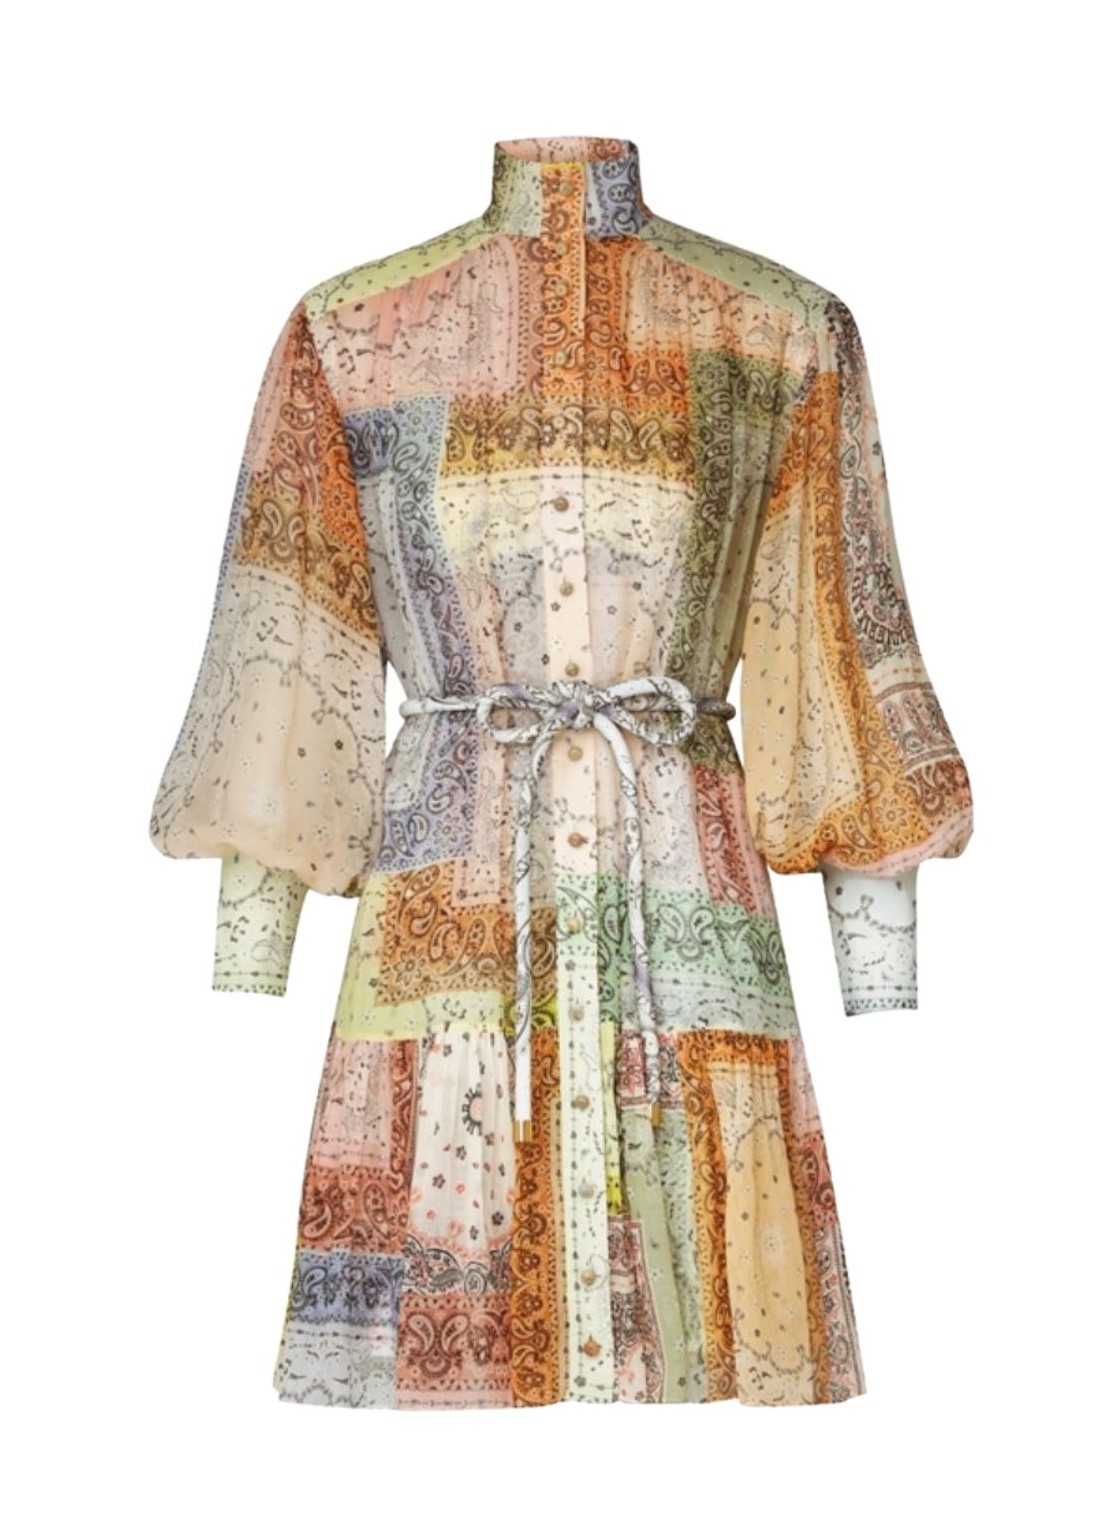 Vestido zimmermann dress woman matchmaker lantern mini dress 4089dmat bnpt talla 2
 